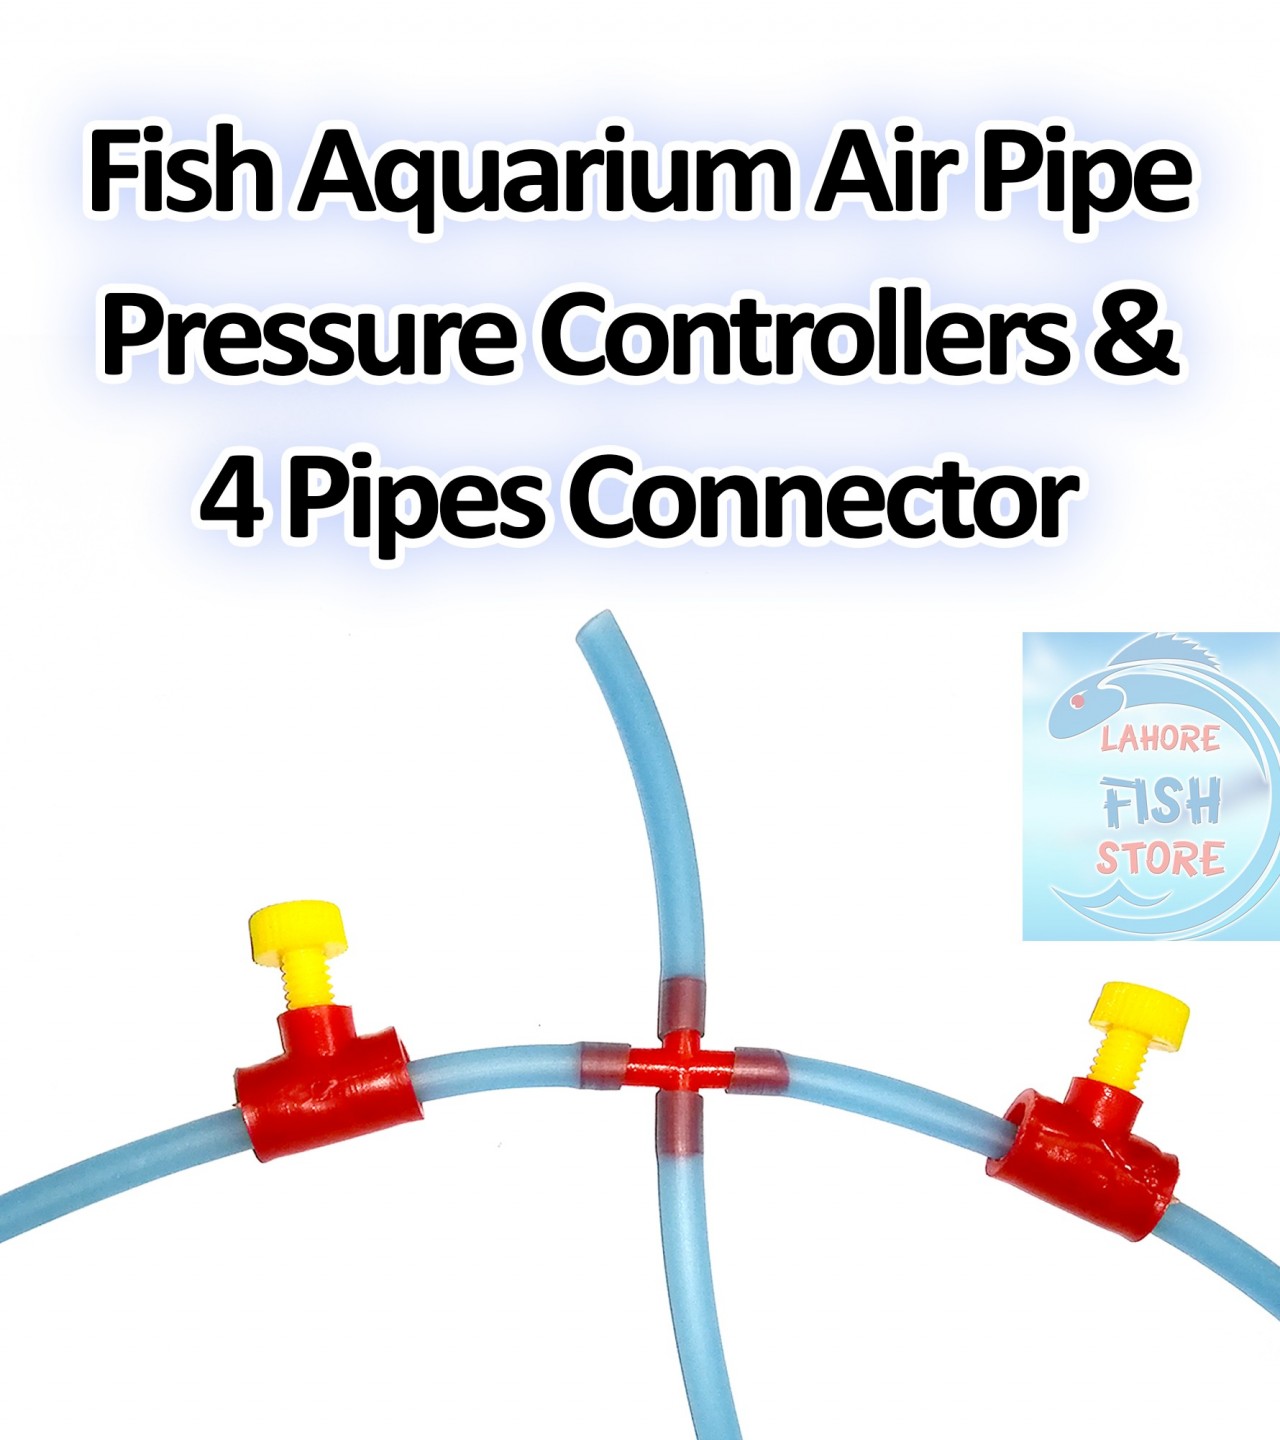 Aquarium Air Pipe Air Pressure Controller & 4 Pipes Connector